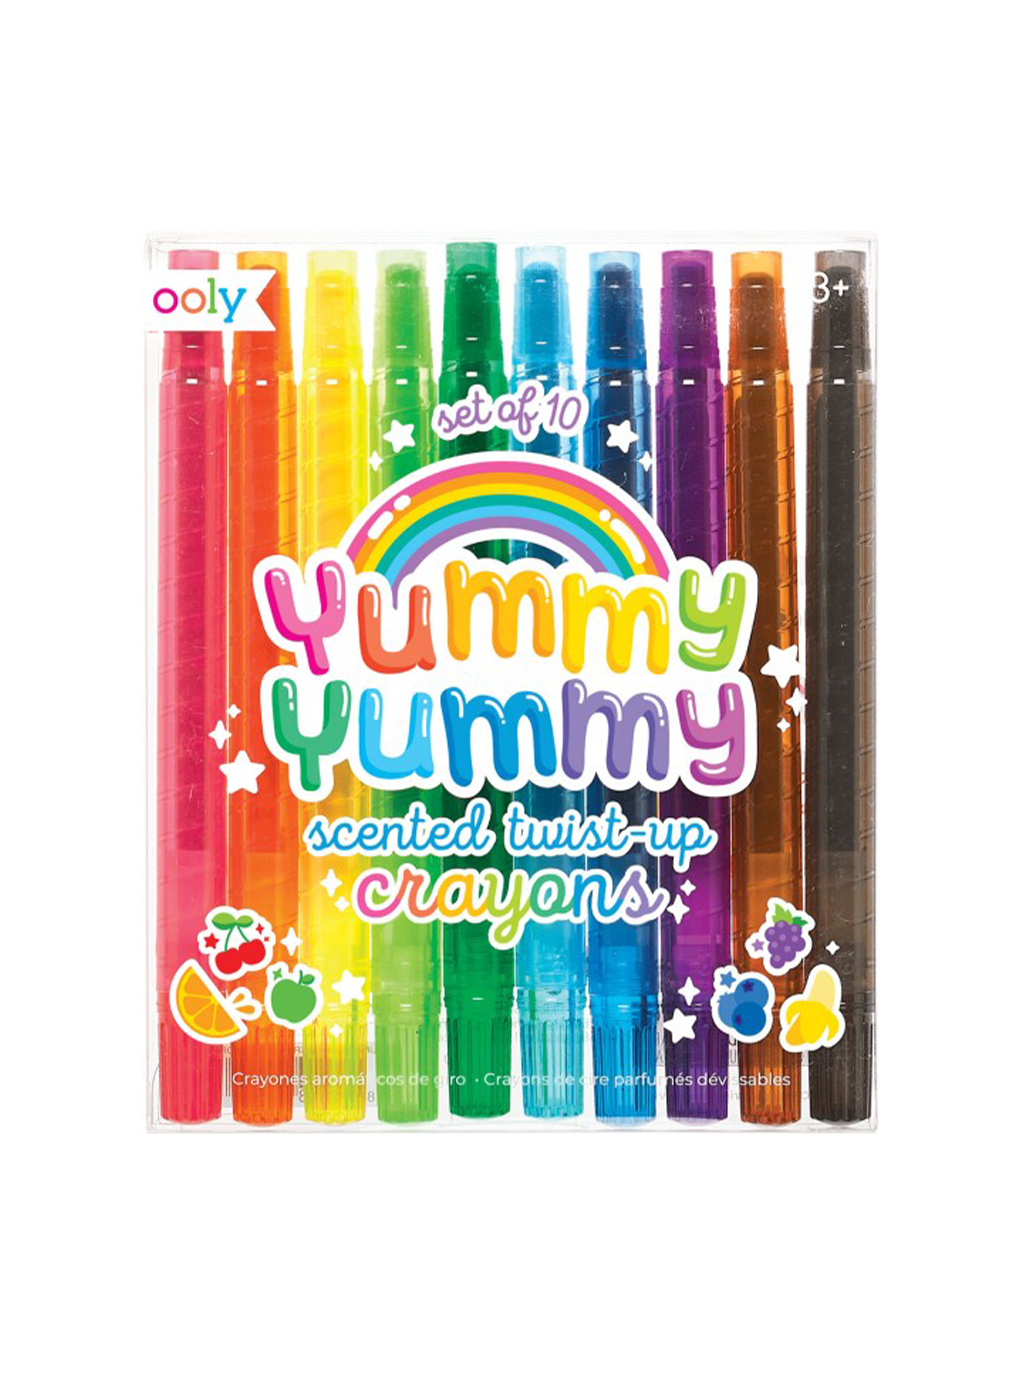 Yummy Yummy scented wax crayons